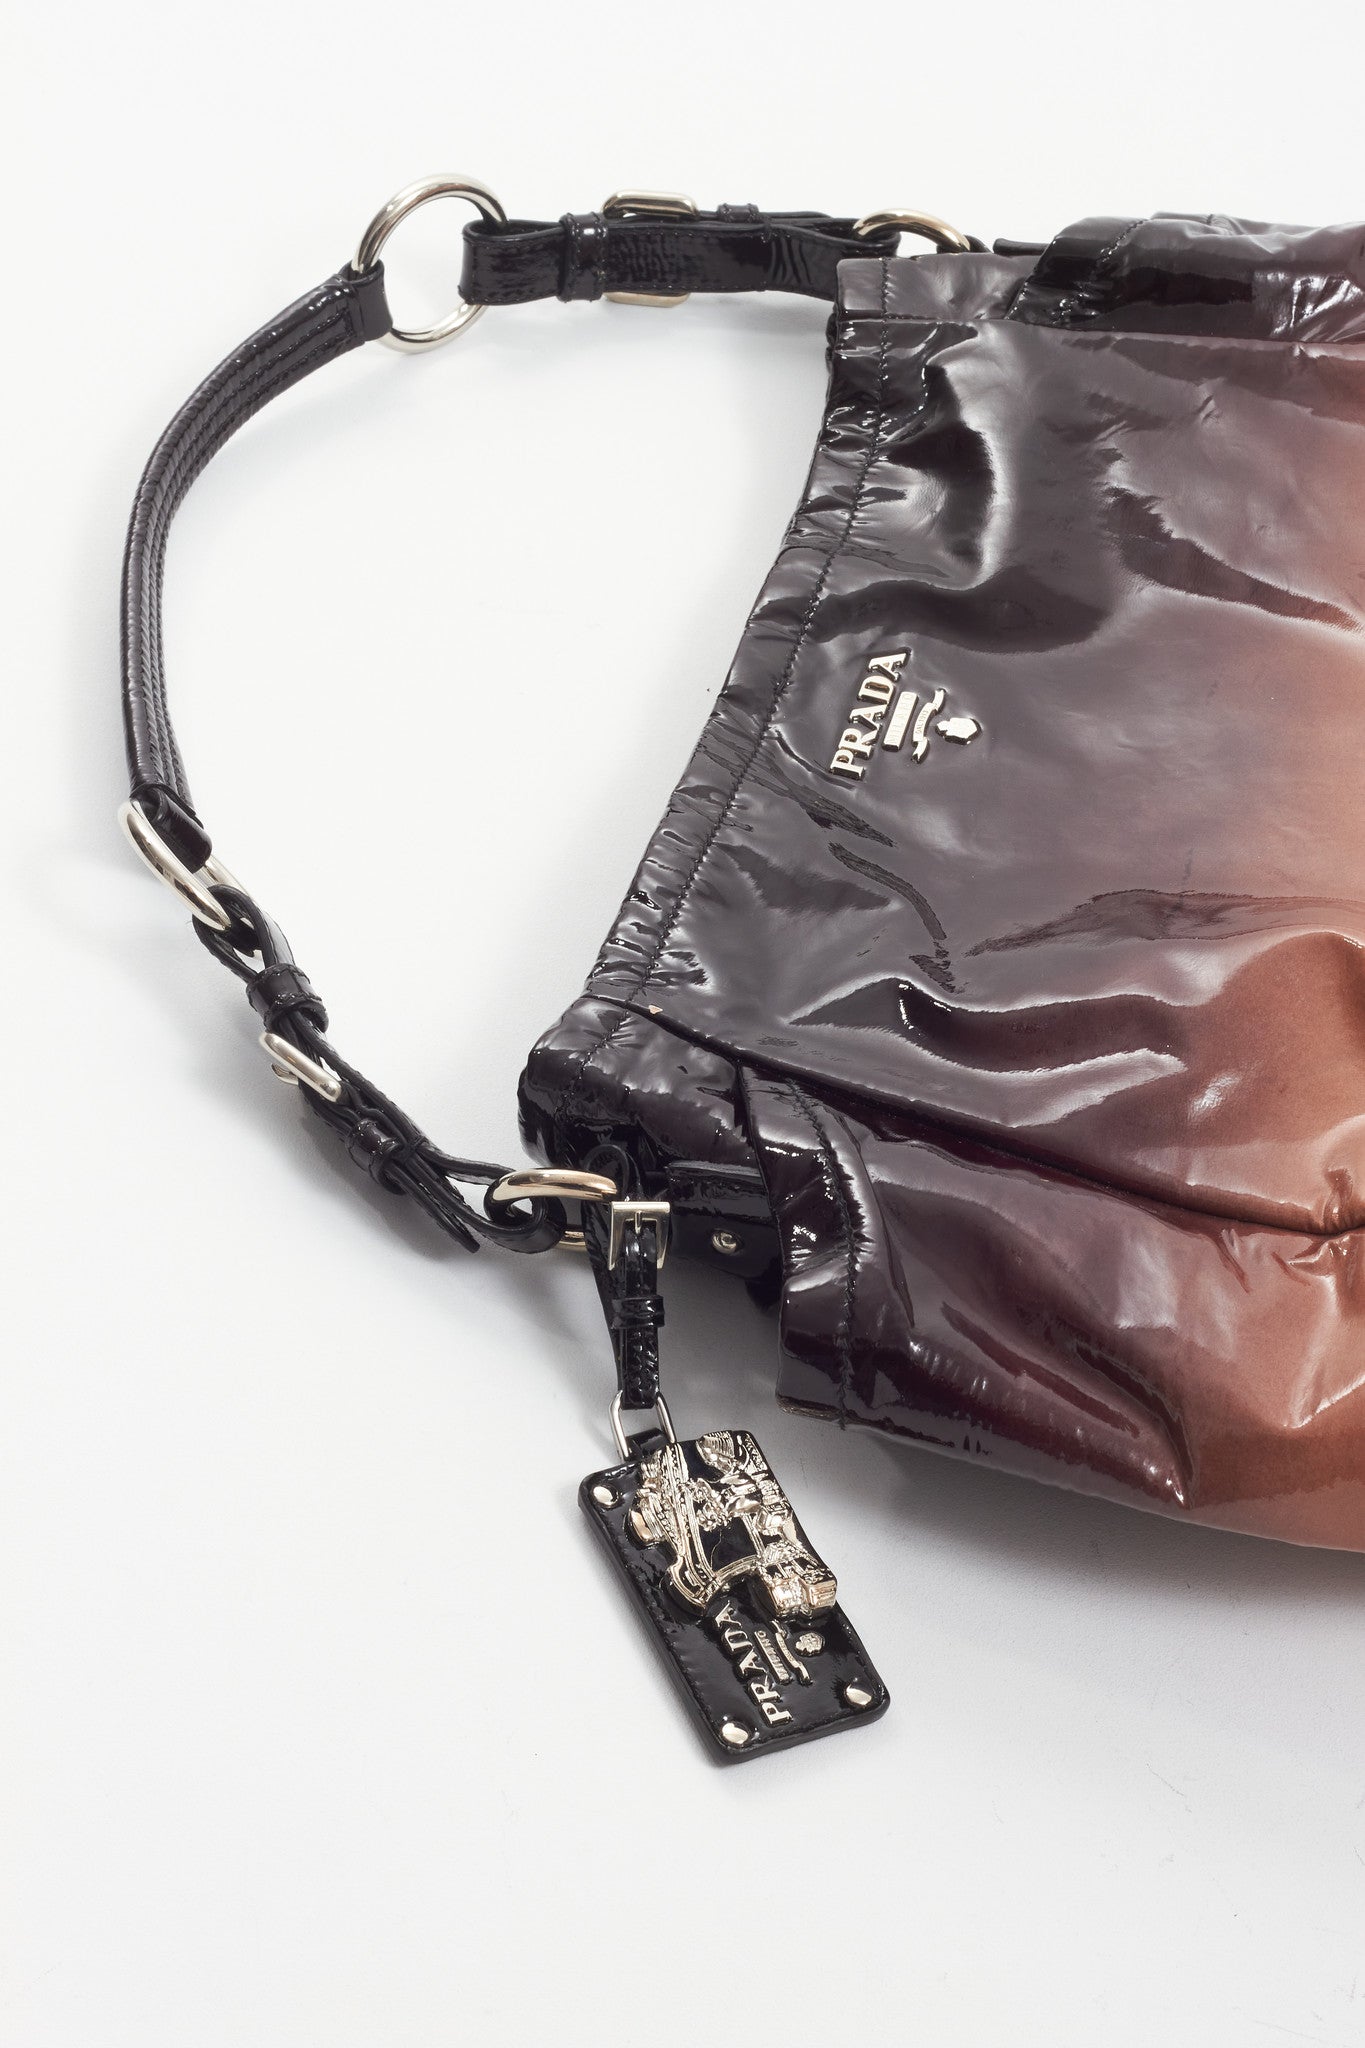 Prada Beige/Black Ombré Patent Leather Tote Bag